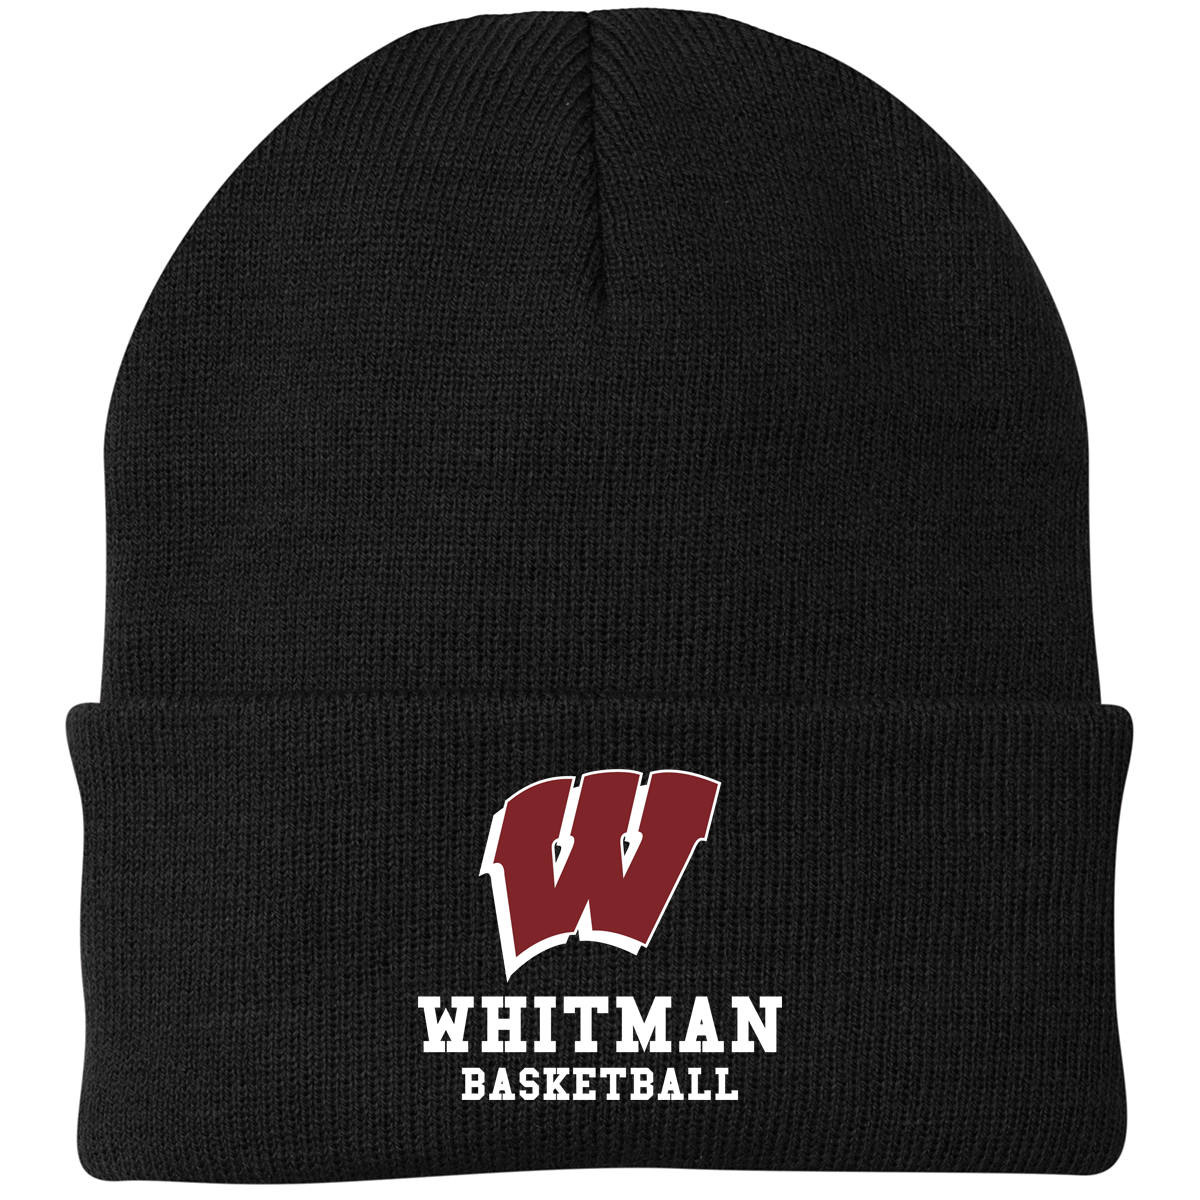 Whitman Basketball Knit Beanie